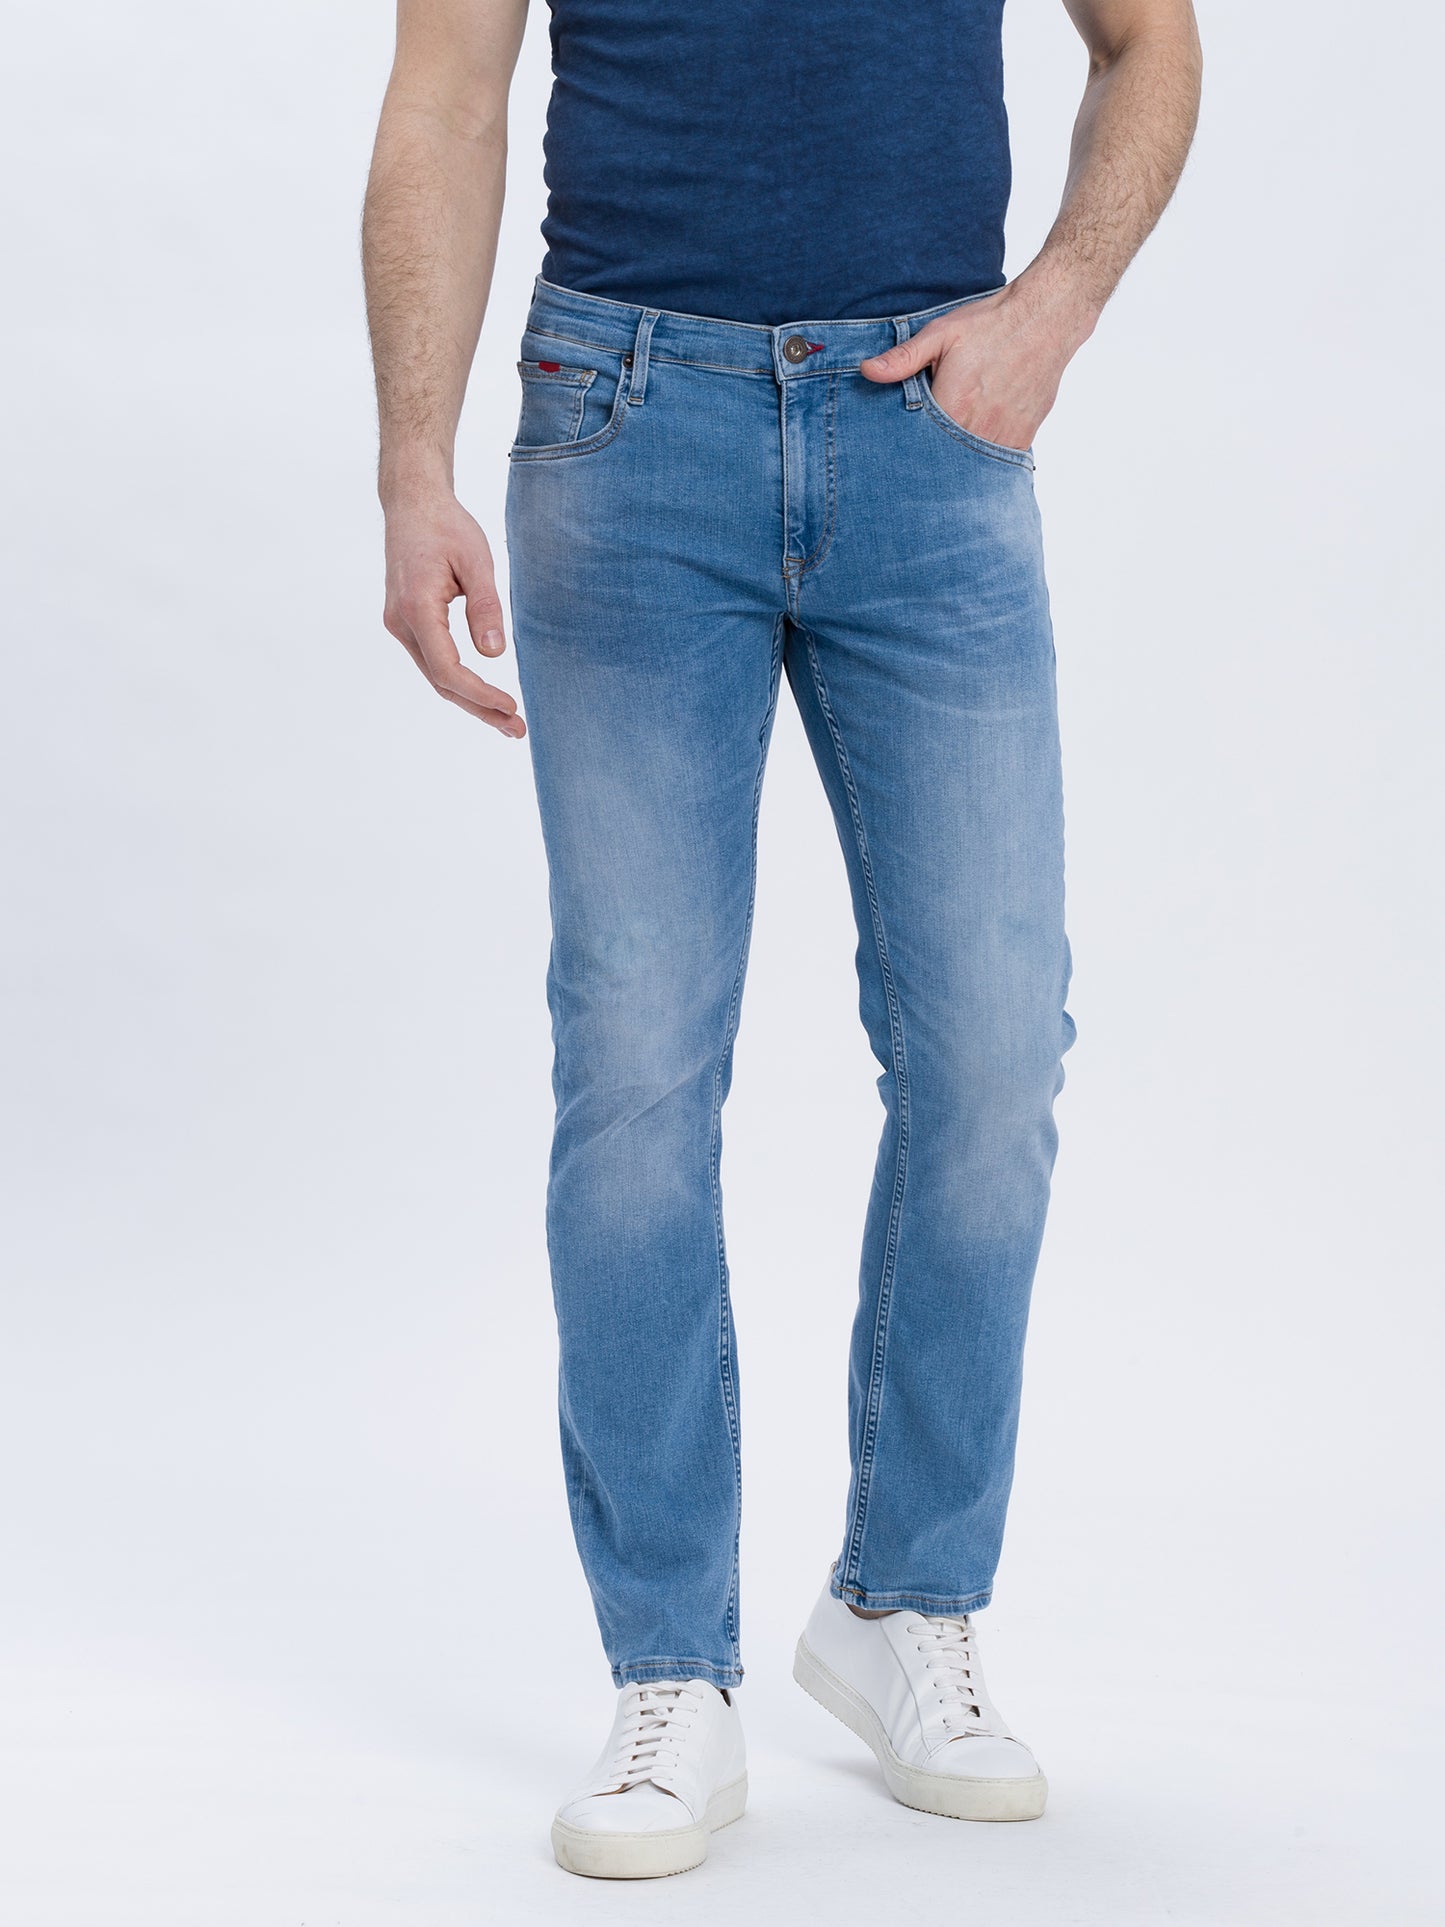 Damien Herren Jeans Slim Fit Regular Waist Straight Leg hellblau